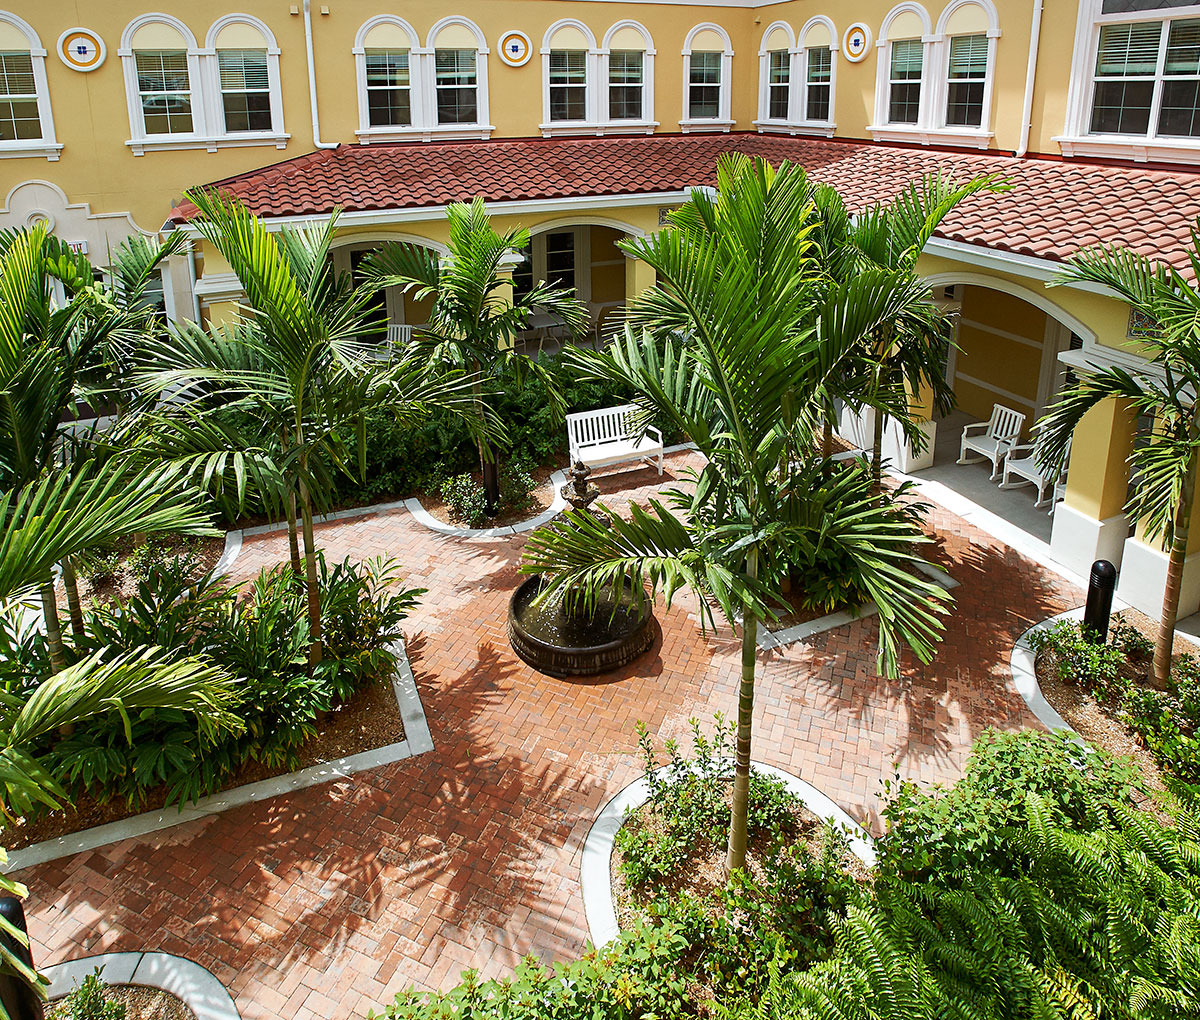 Image of the Terraces at Bonita Springs courtyard